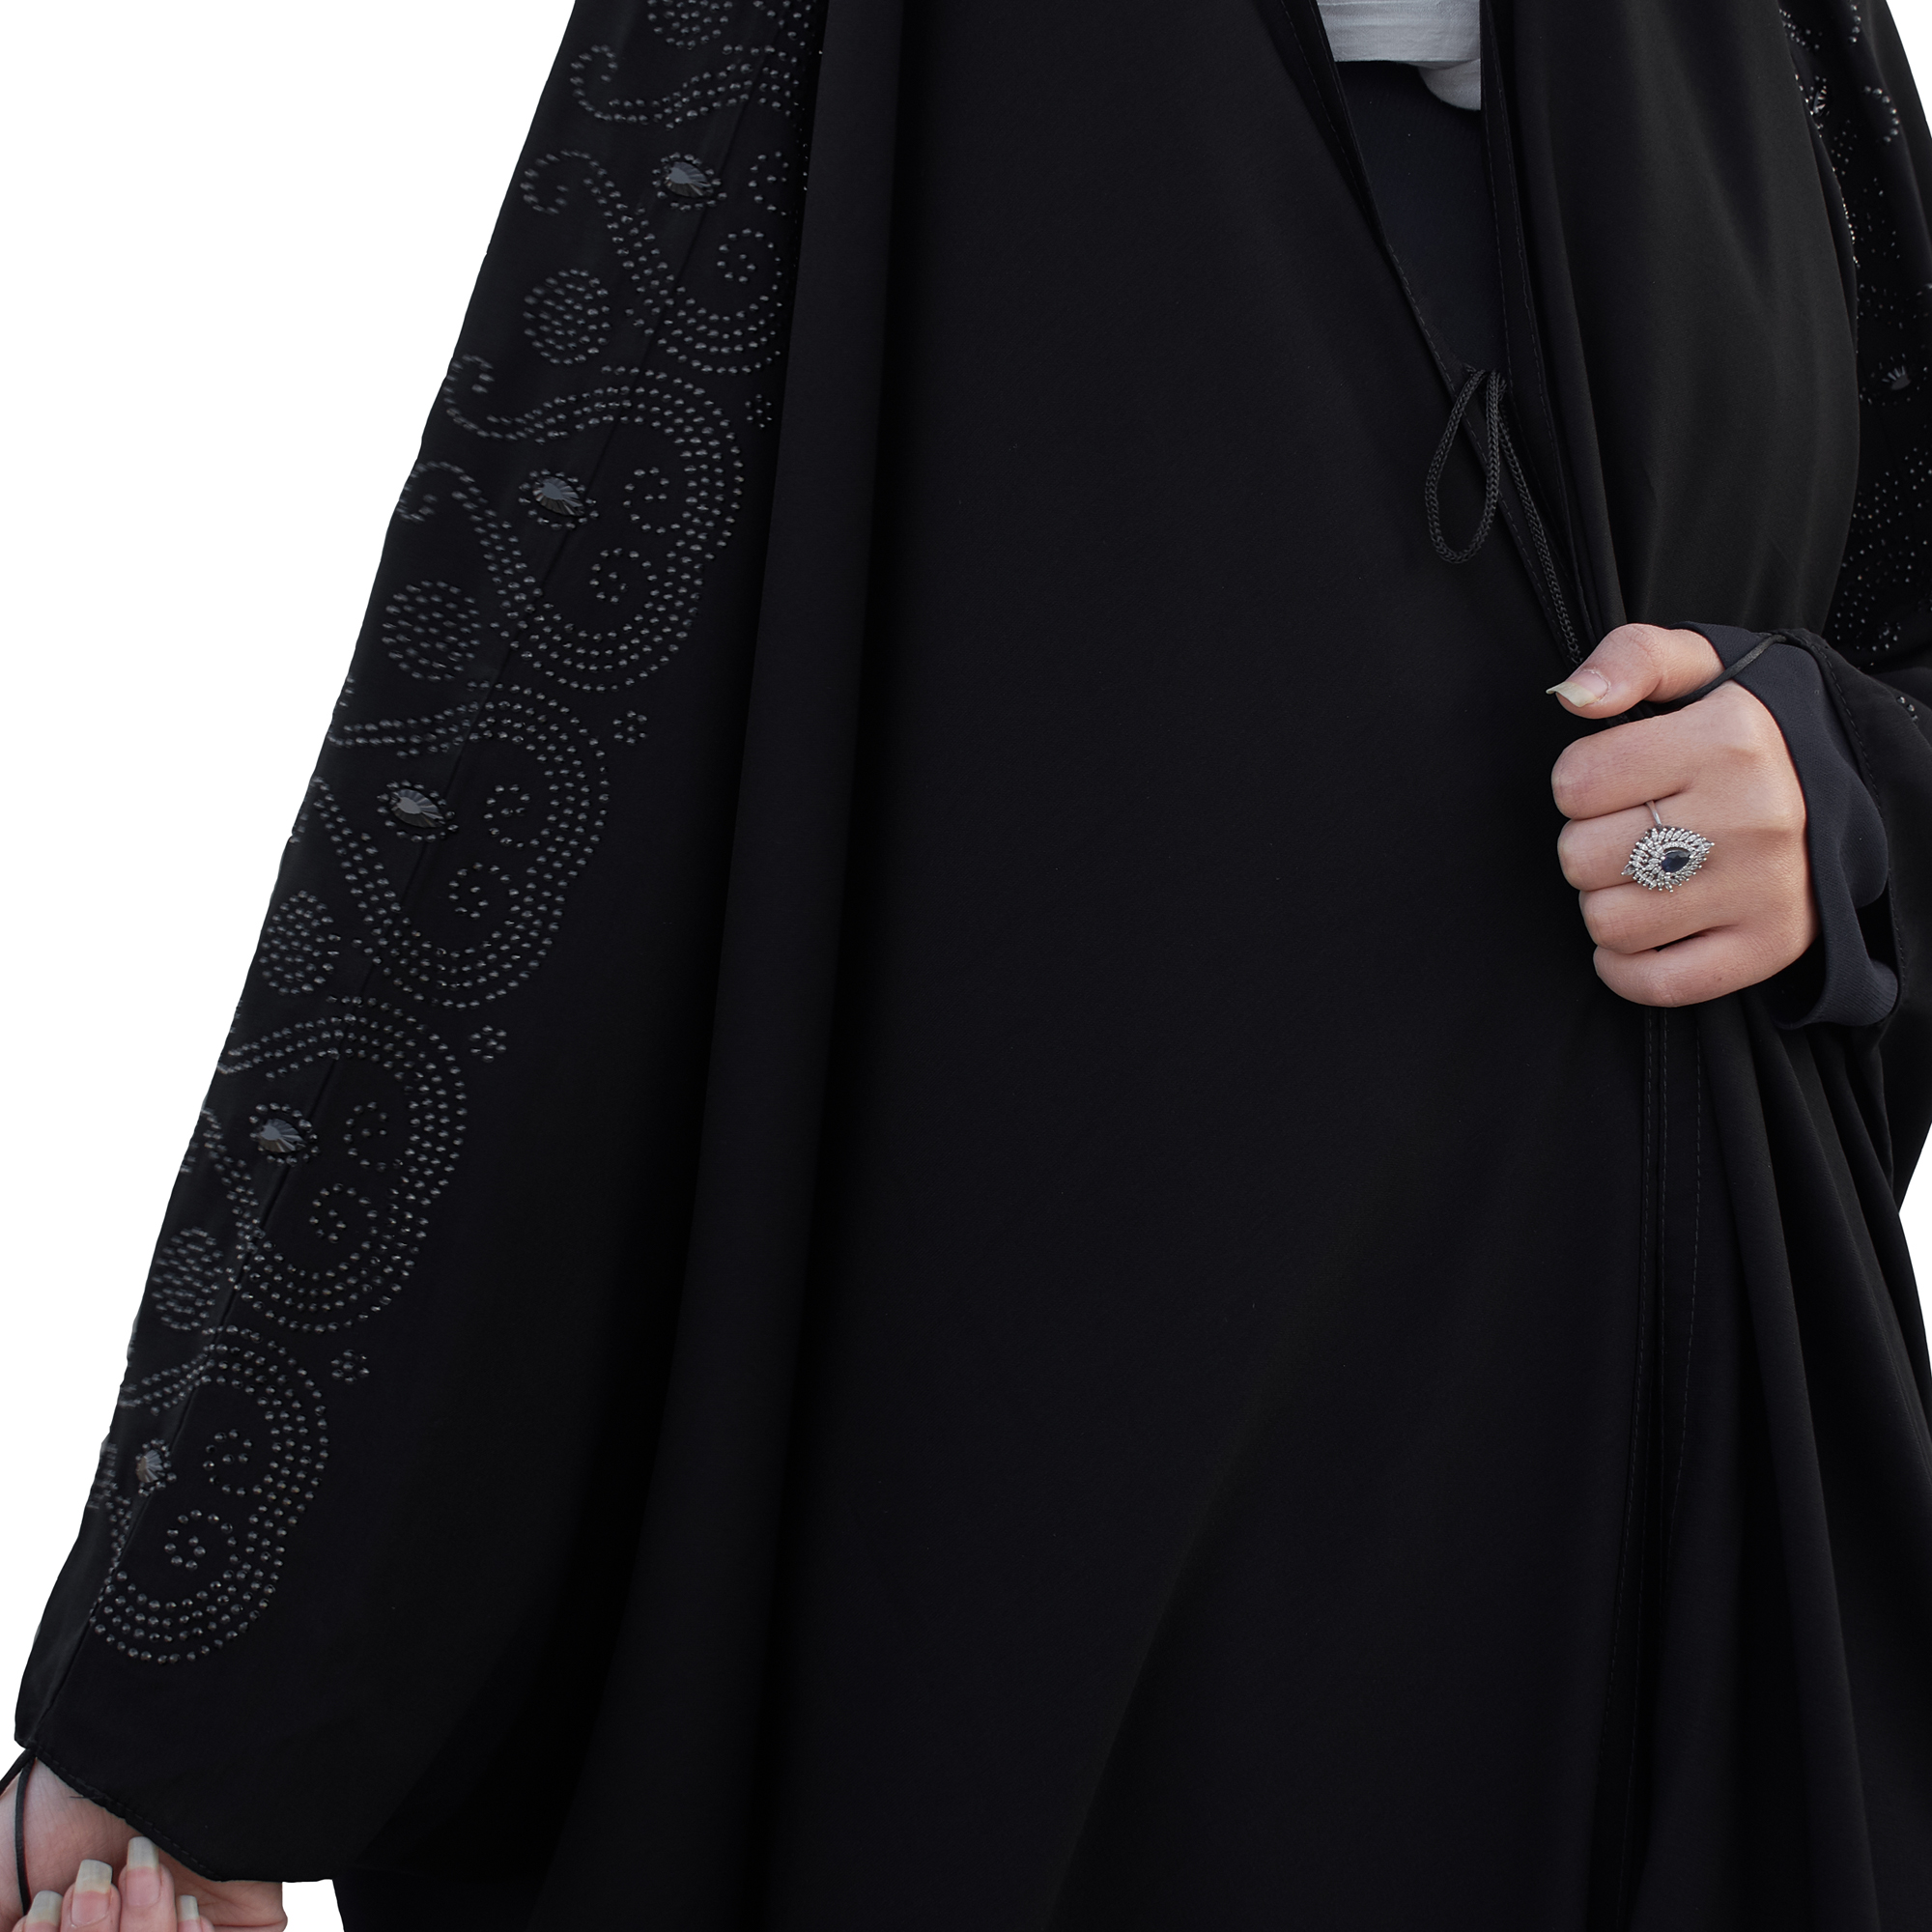 چادر حجاب فاطمی مدل اسرا کد Har 1047 -  - 2